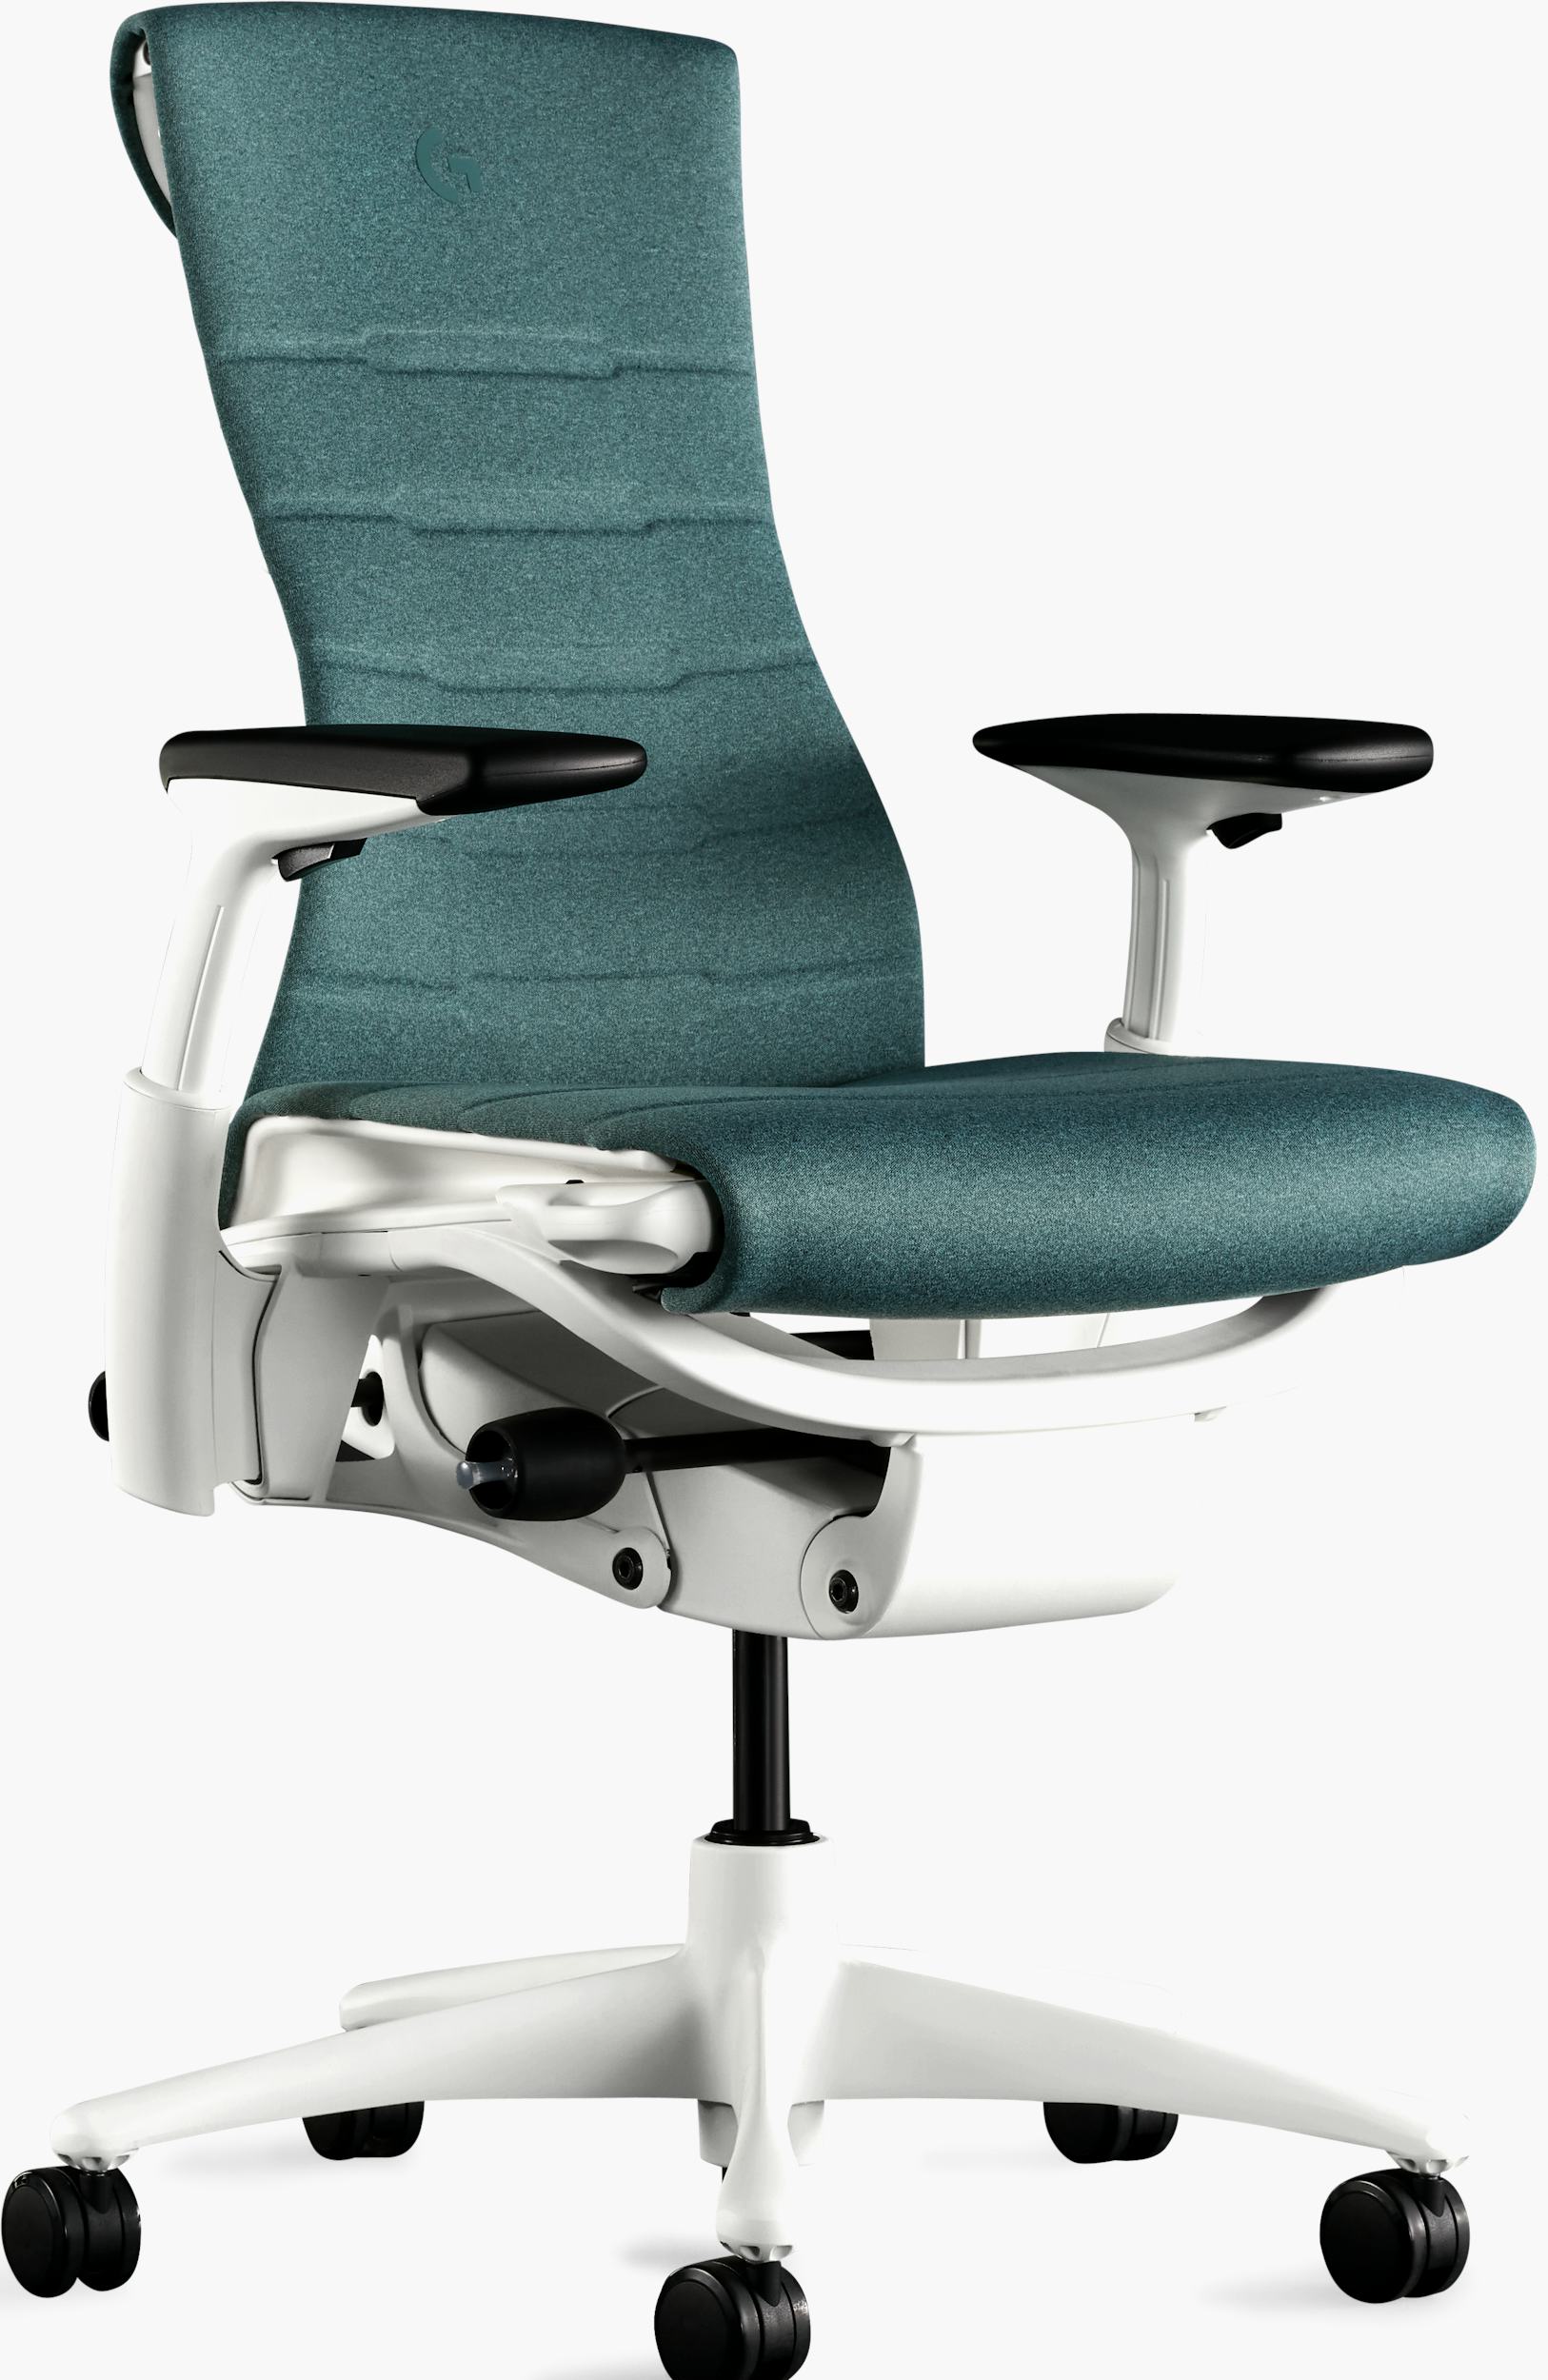 Hip High Chair - Northeast Mobility